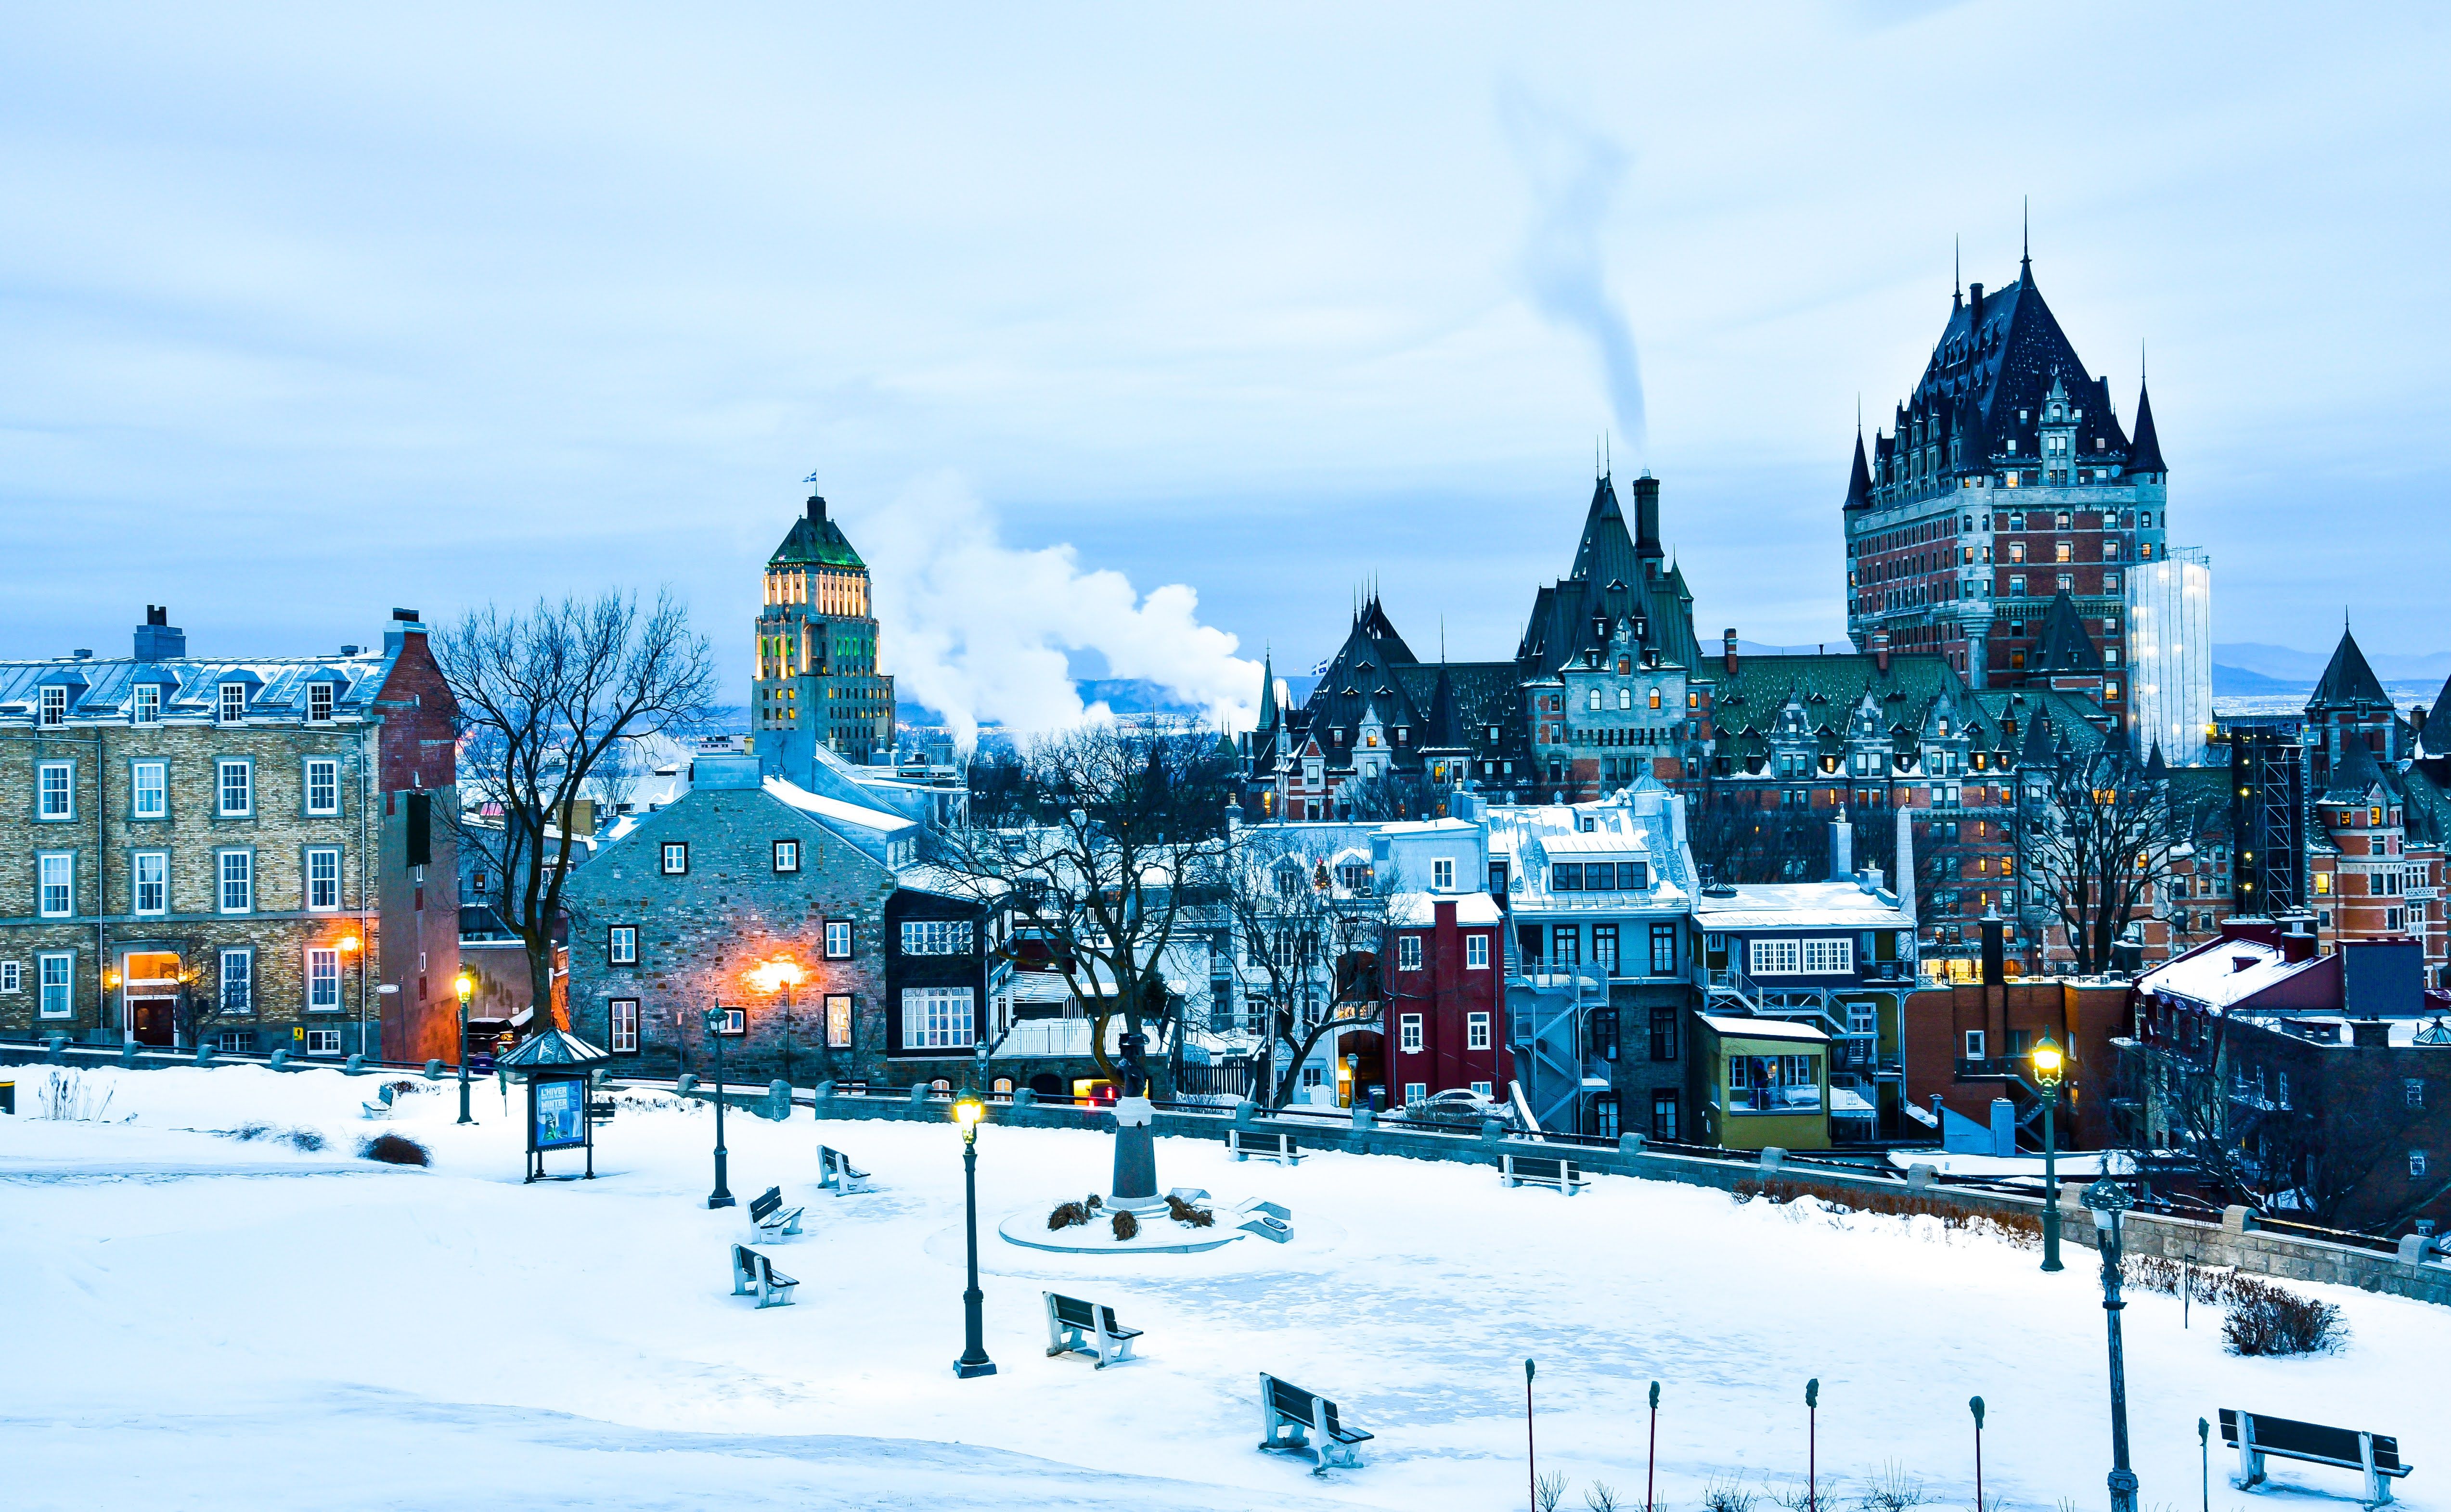 Blusukan Musim Dingin ke Kota Tua Quebec City, Kanada Halaman 1 - Kompasiana.com